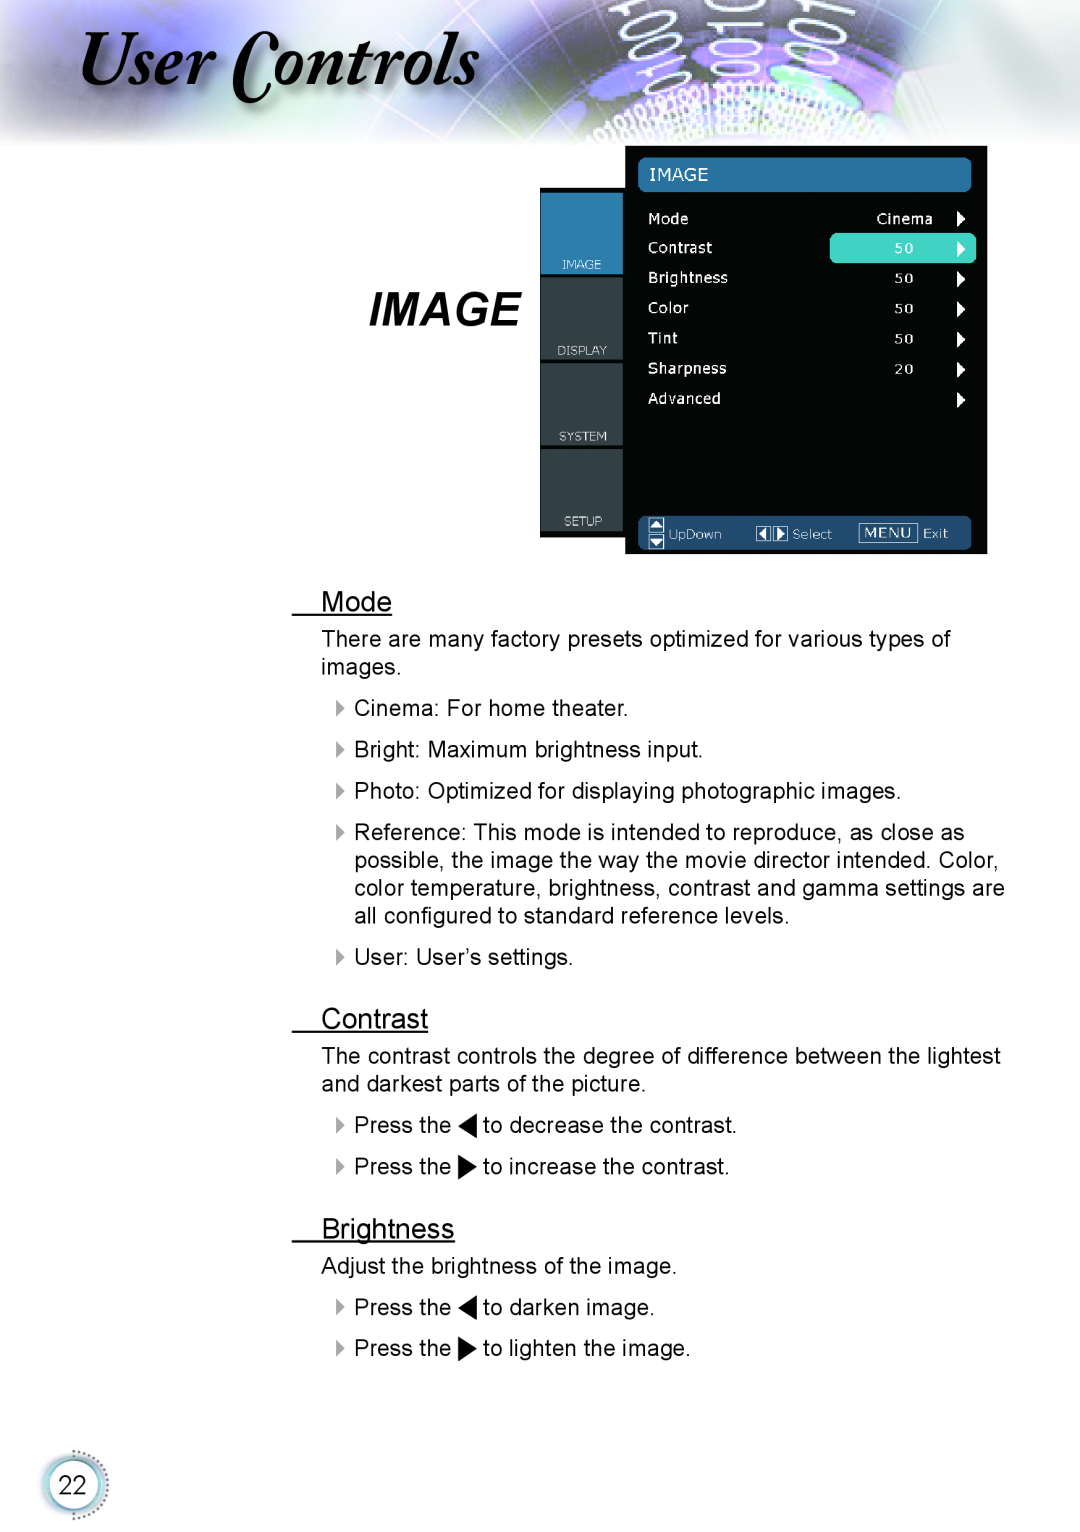 Optoma Technology HD20 manual Image, Mode, Contrast, Brightness, ser ontrols 